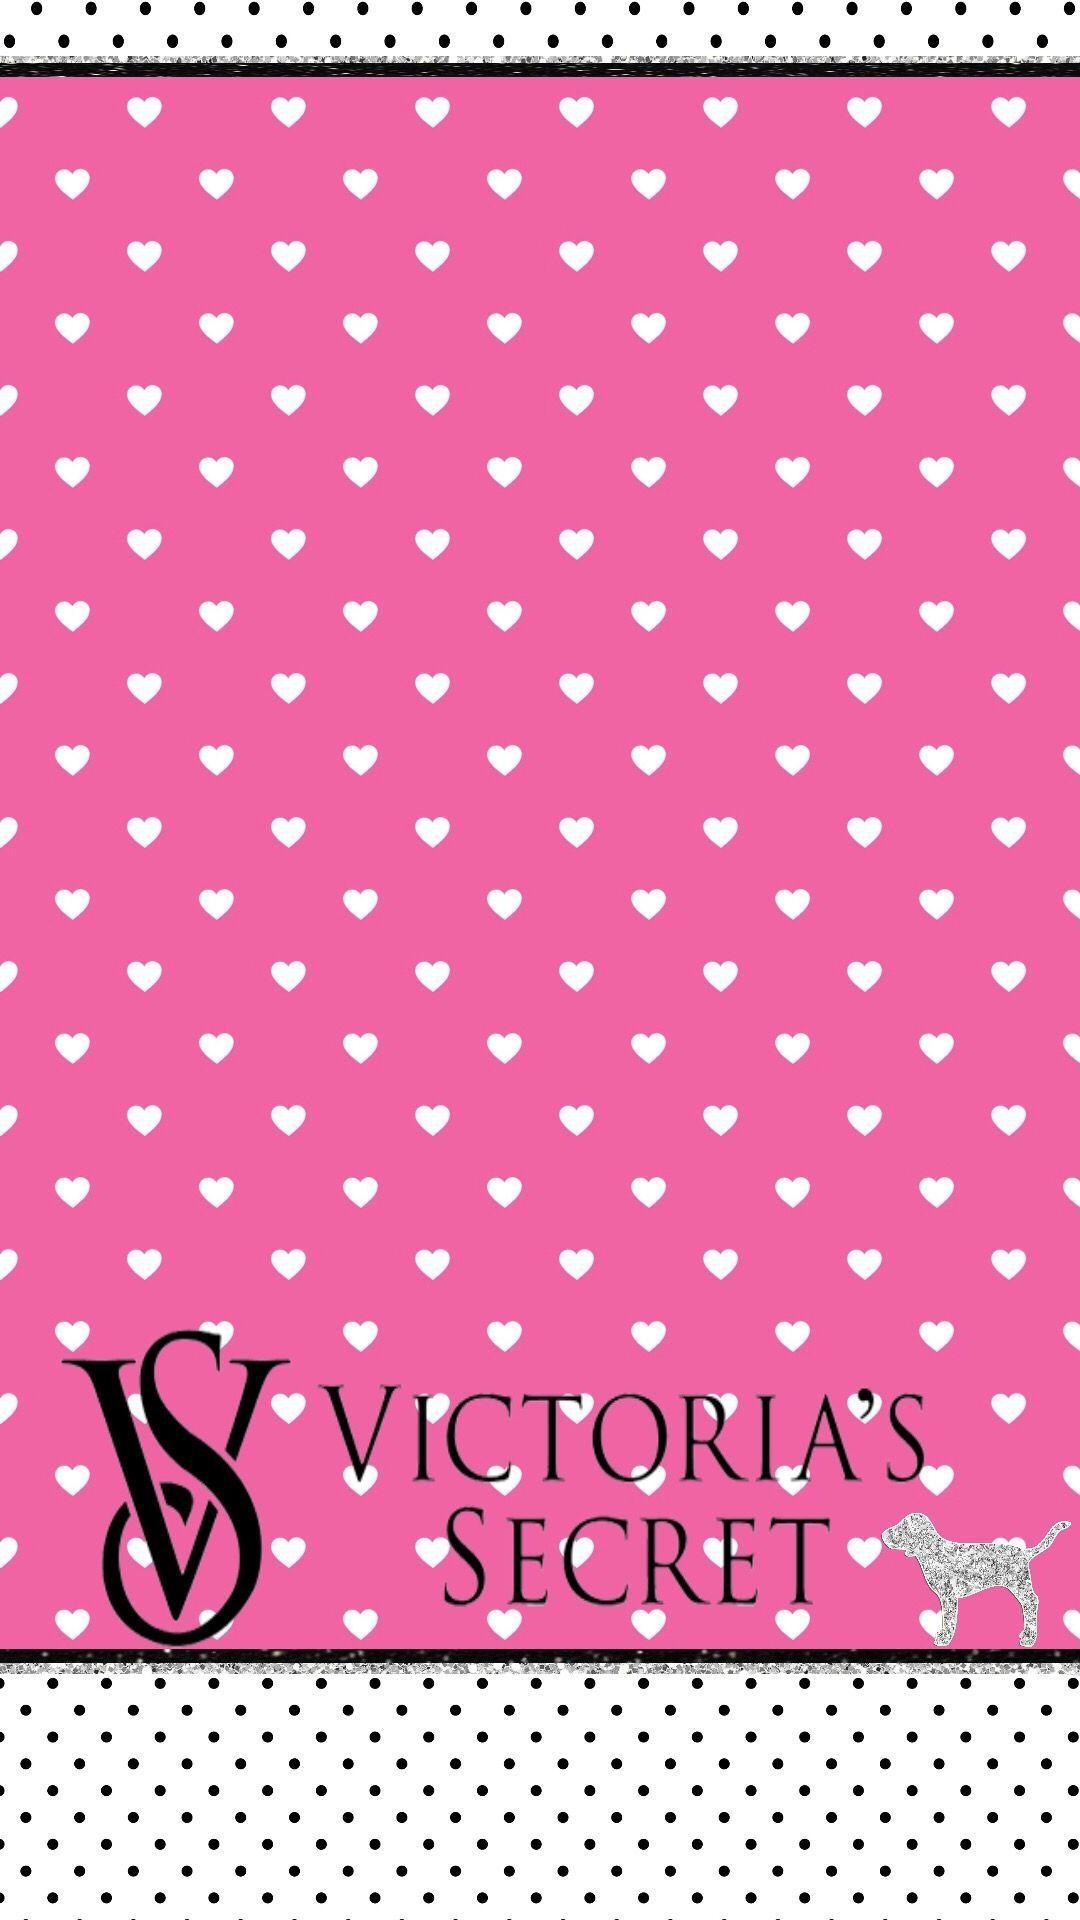 Victoria's Secret Wallpapers on